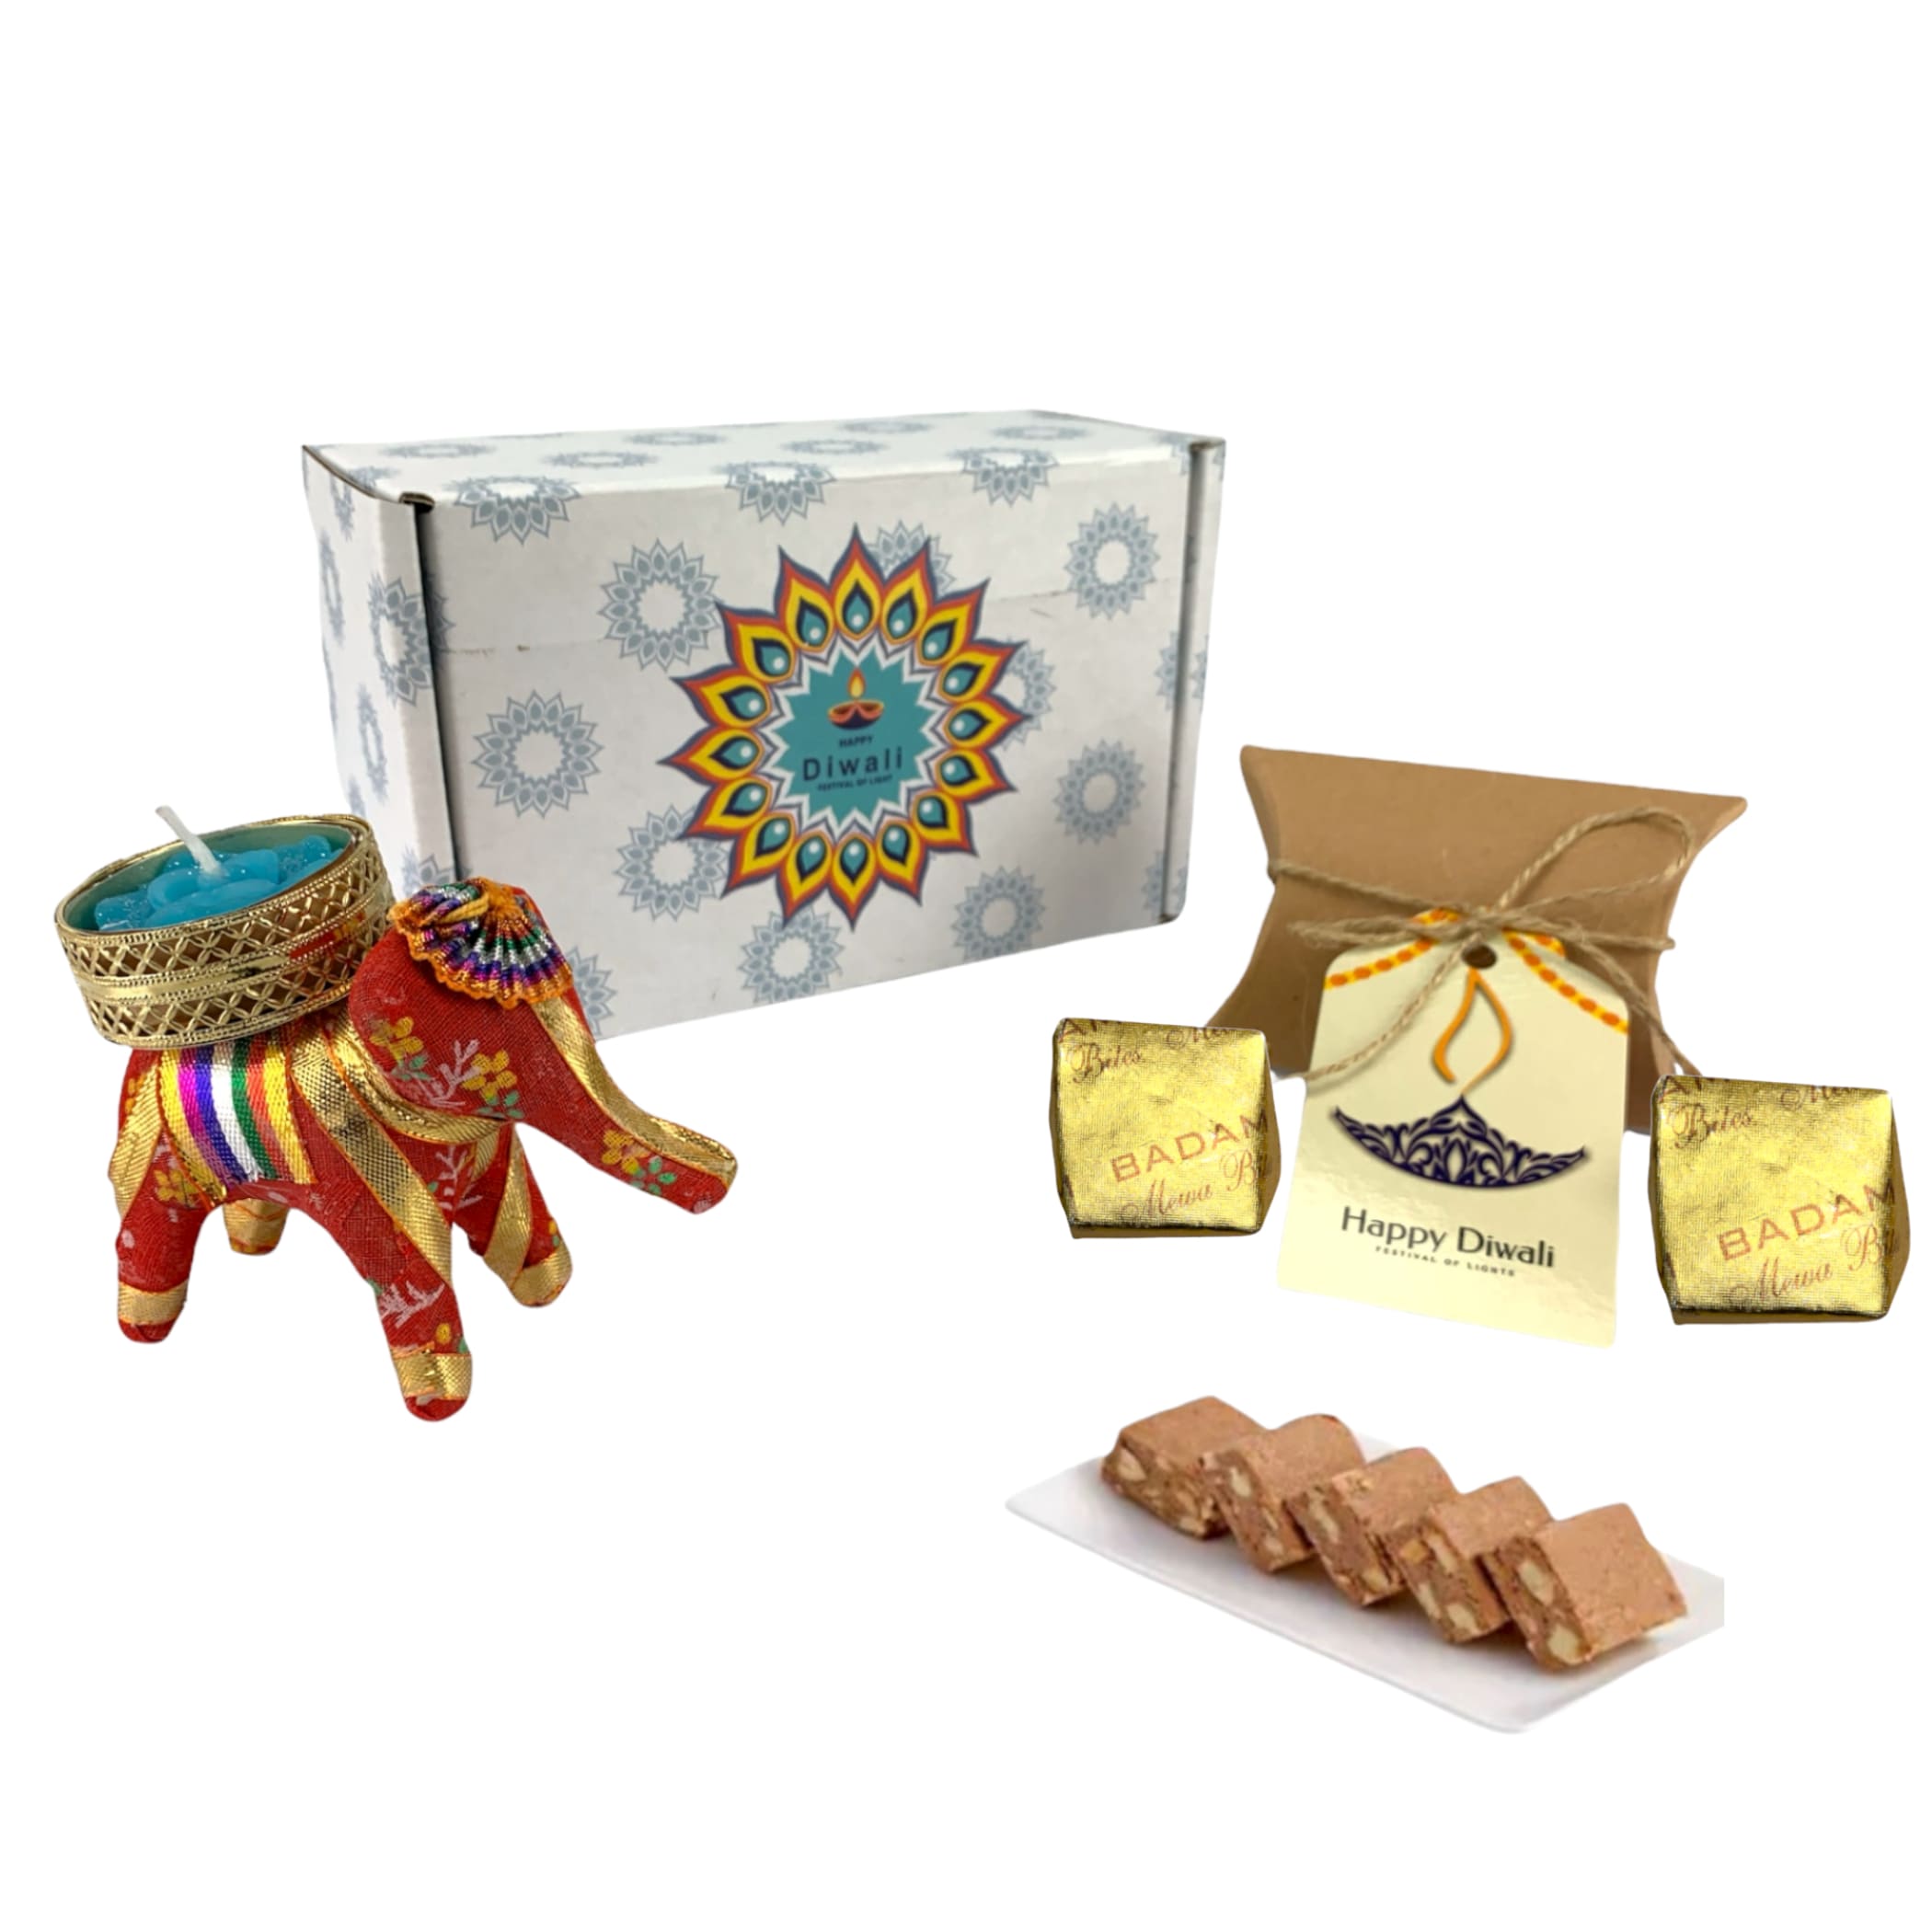 25 Best Diwali Gifts - Unique Diwali Gift Ideas